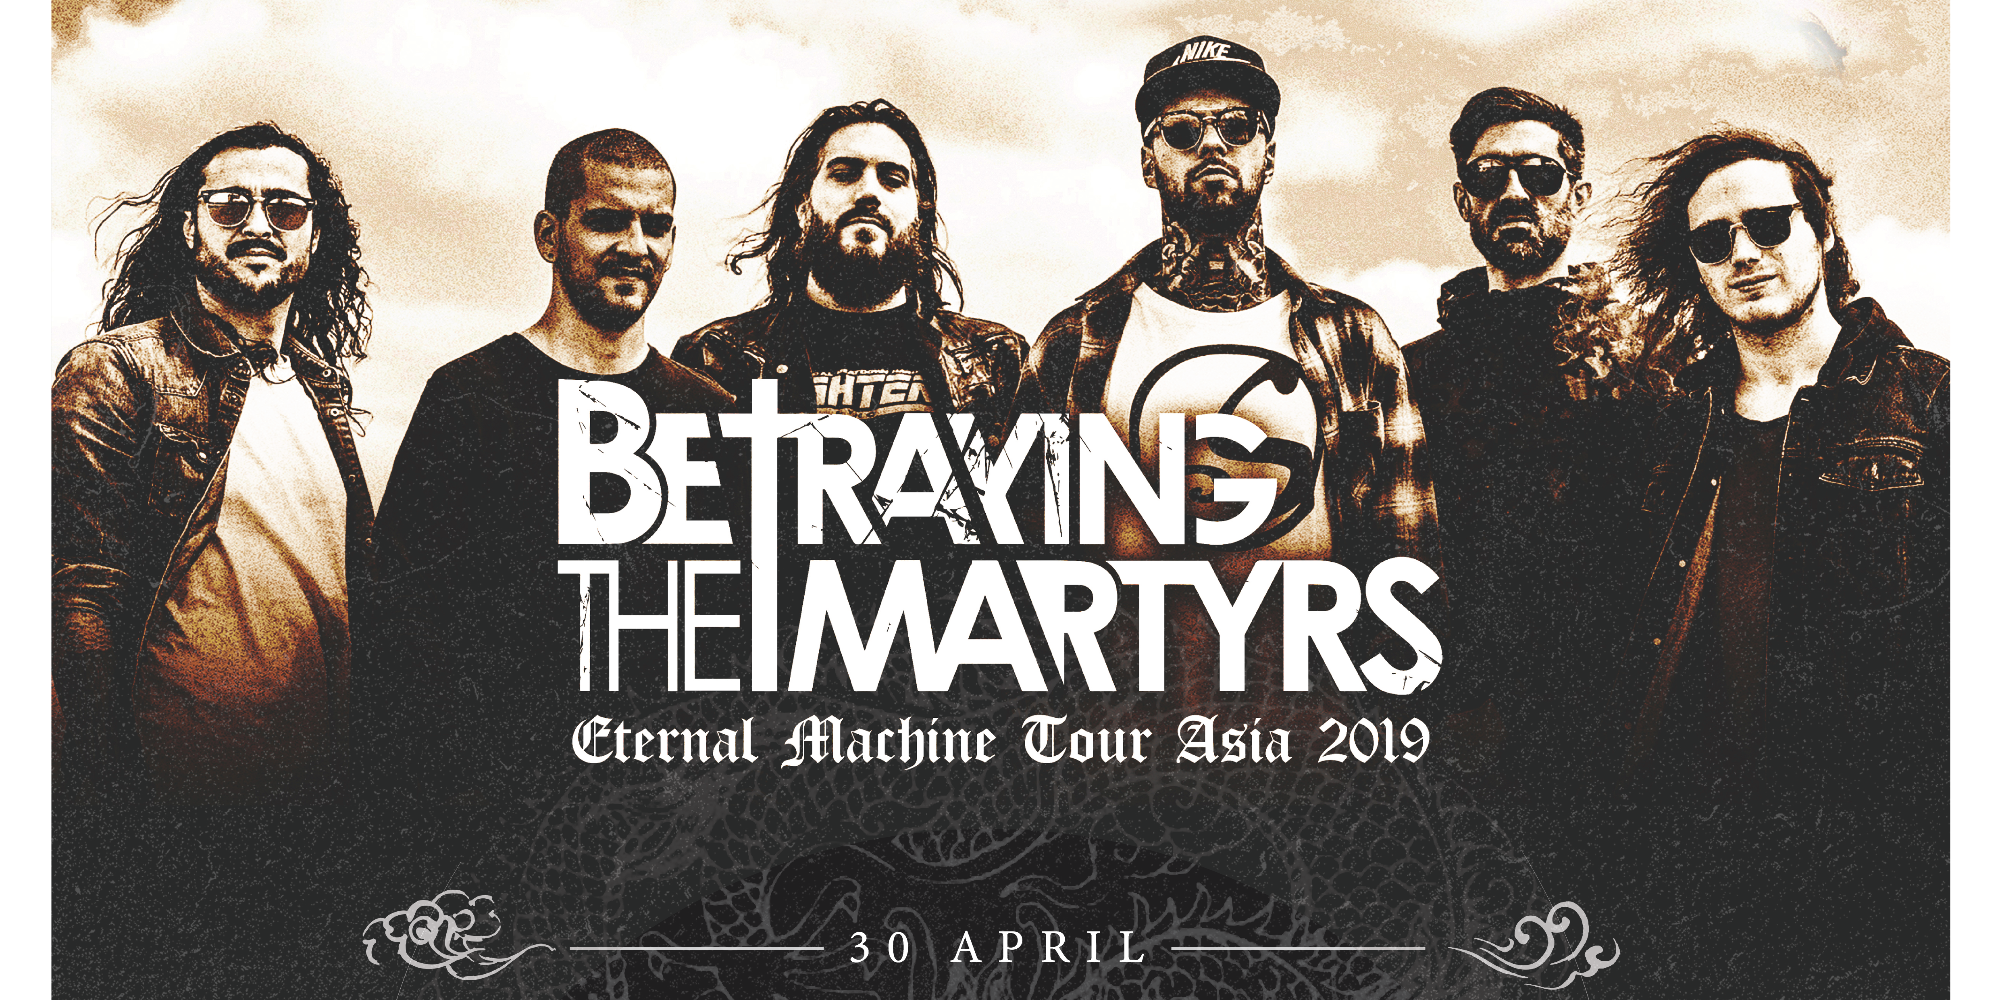 Betraying The Martyrs「Eternal Machine Tour」2019 - Live in Hong Kong